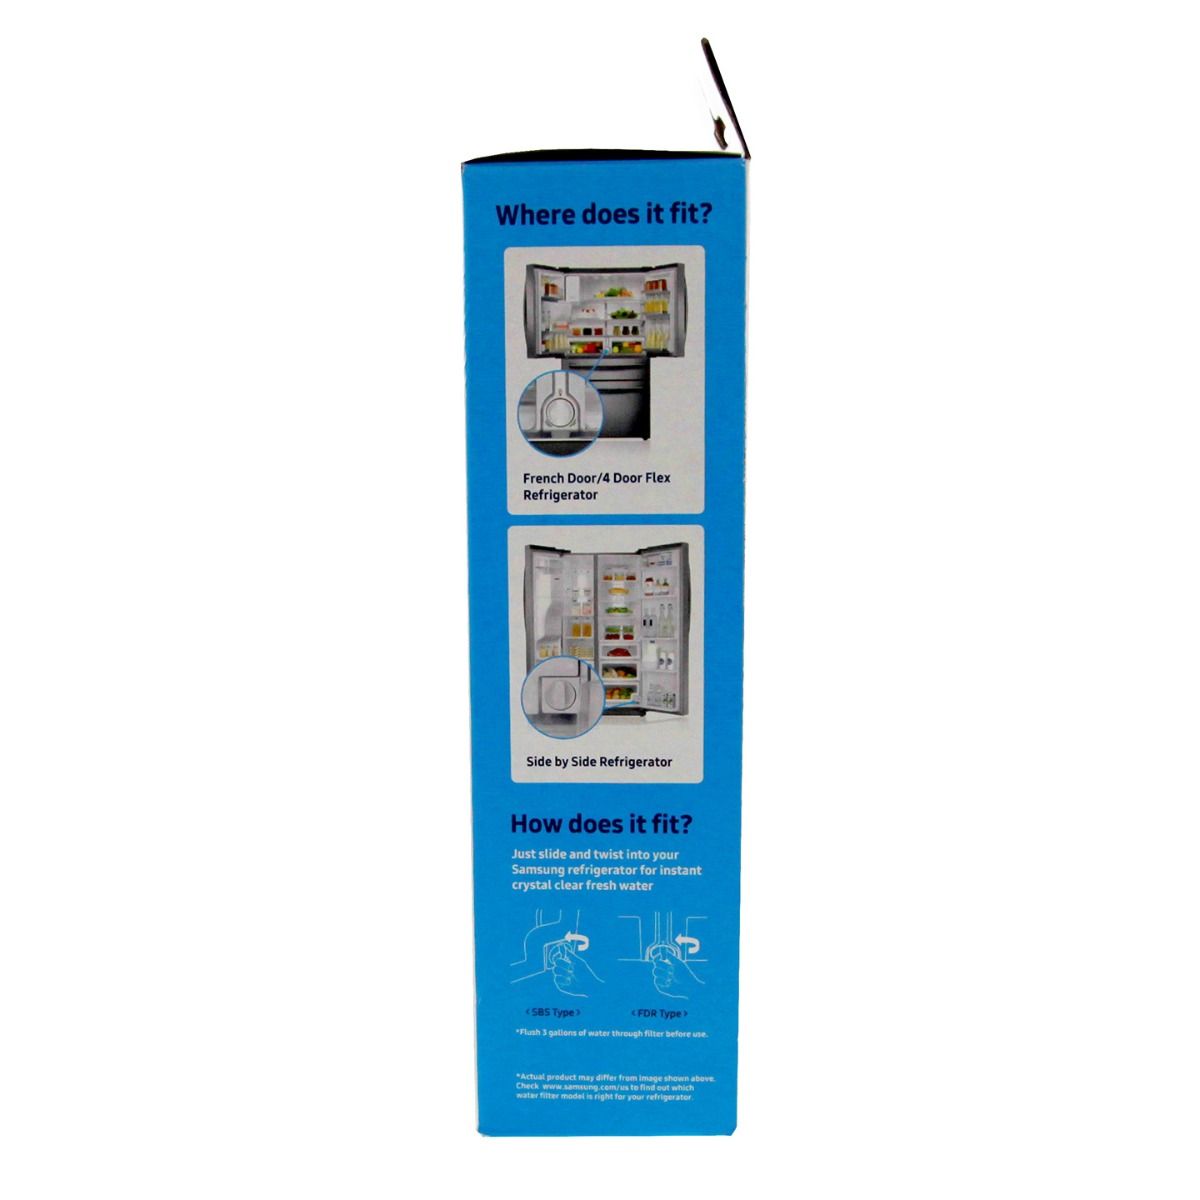 Samsung DA29-00020B Refrigerator Water Filter